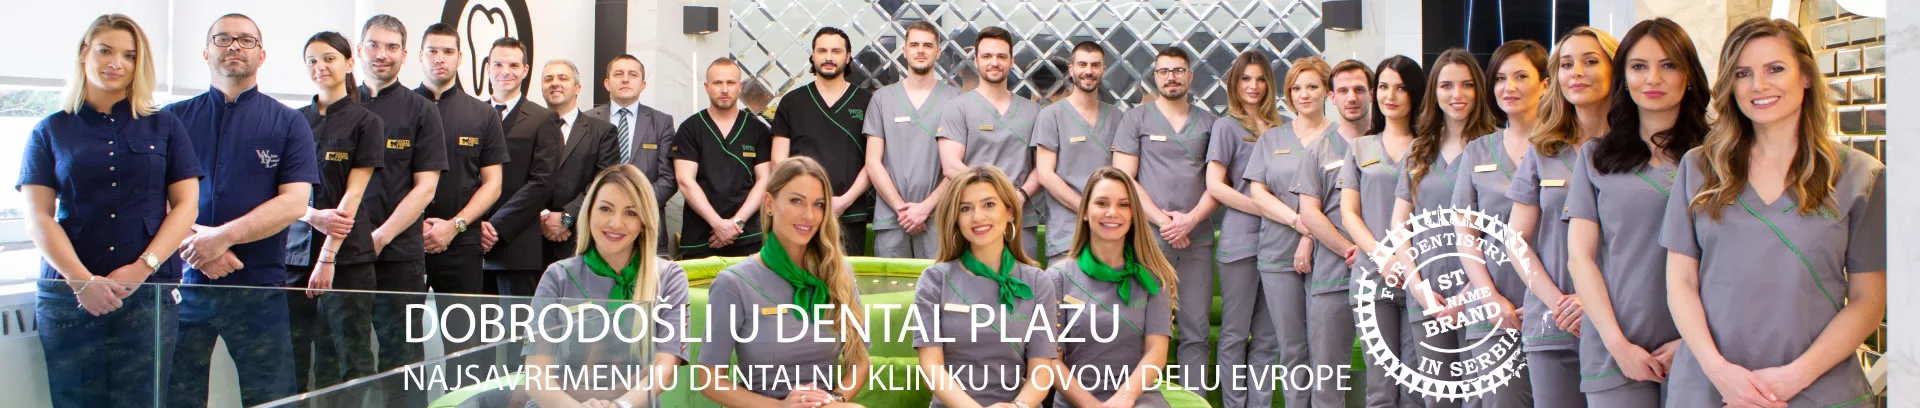 dental plaza slika tima